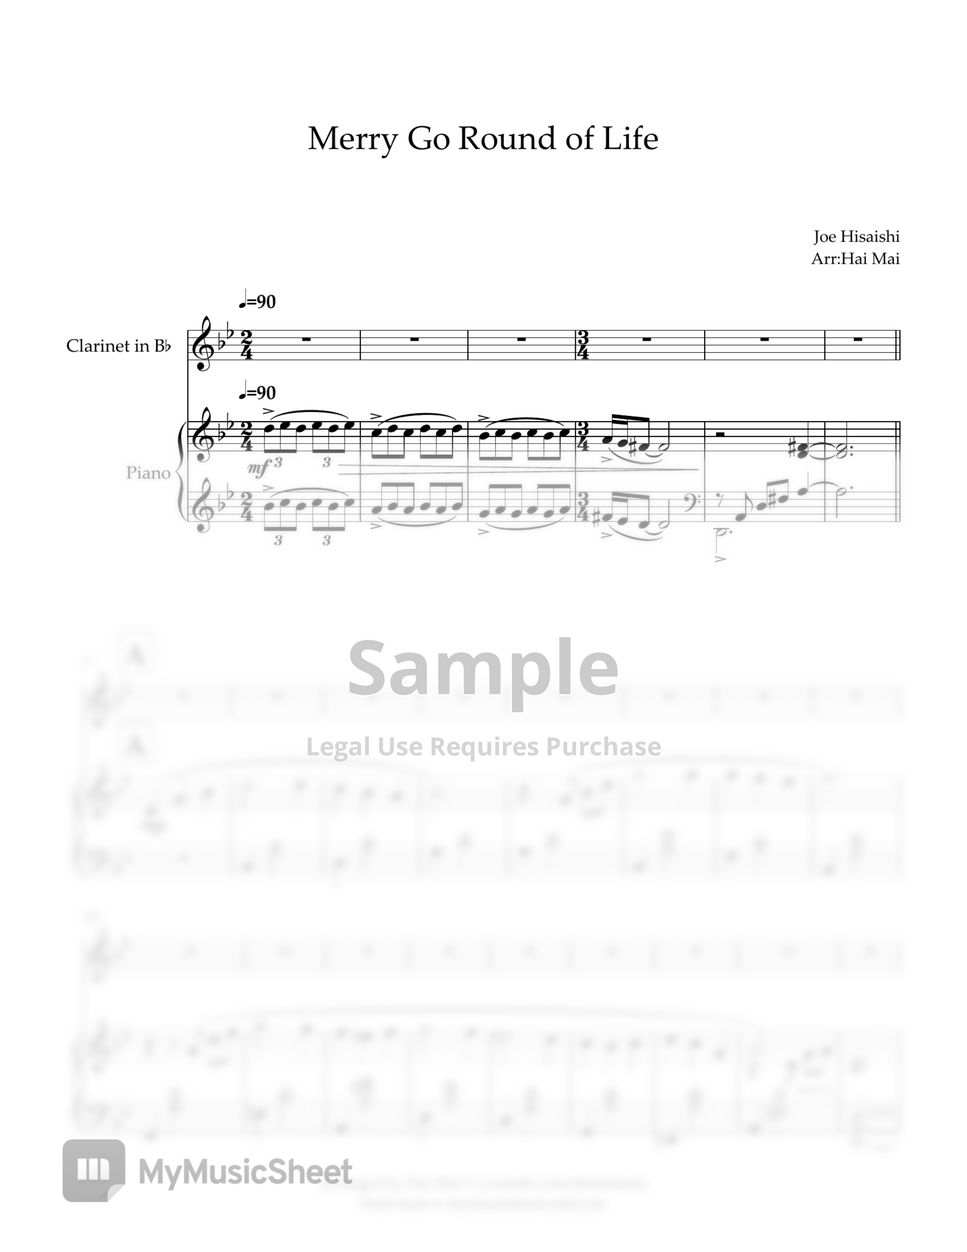 Joe Hisaishi - Merry Go Round of Life for Clarinet in Bb (easy) and Piano Accompaniment by Hai Mai